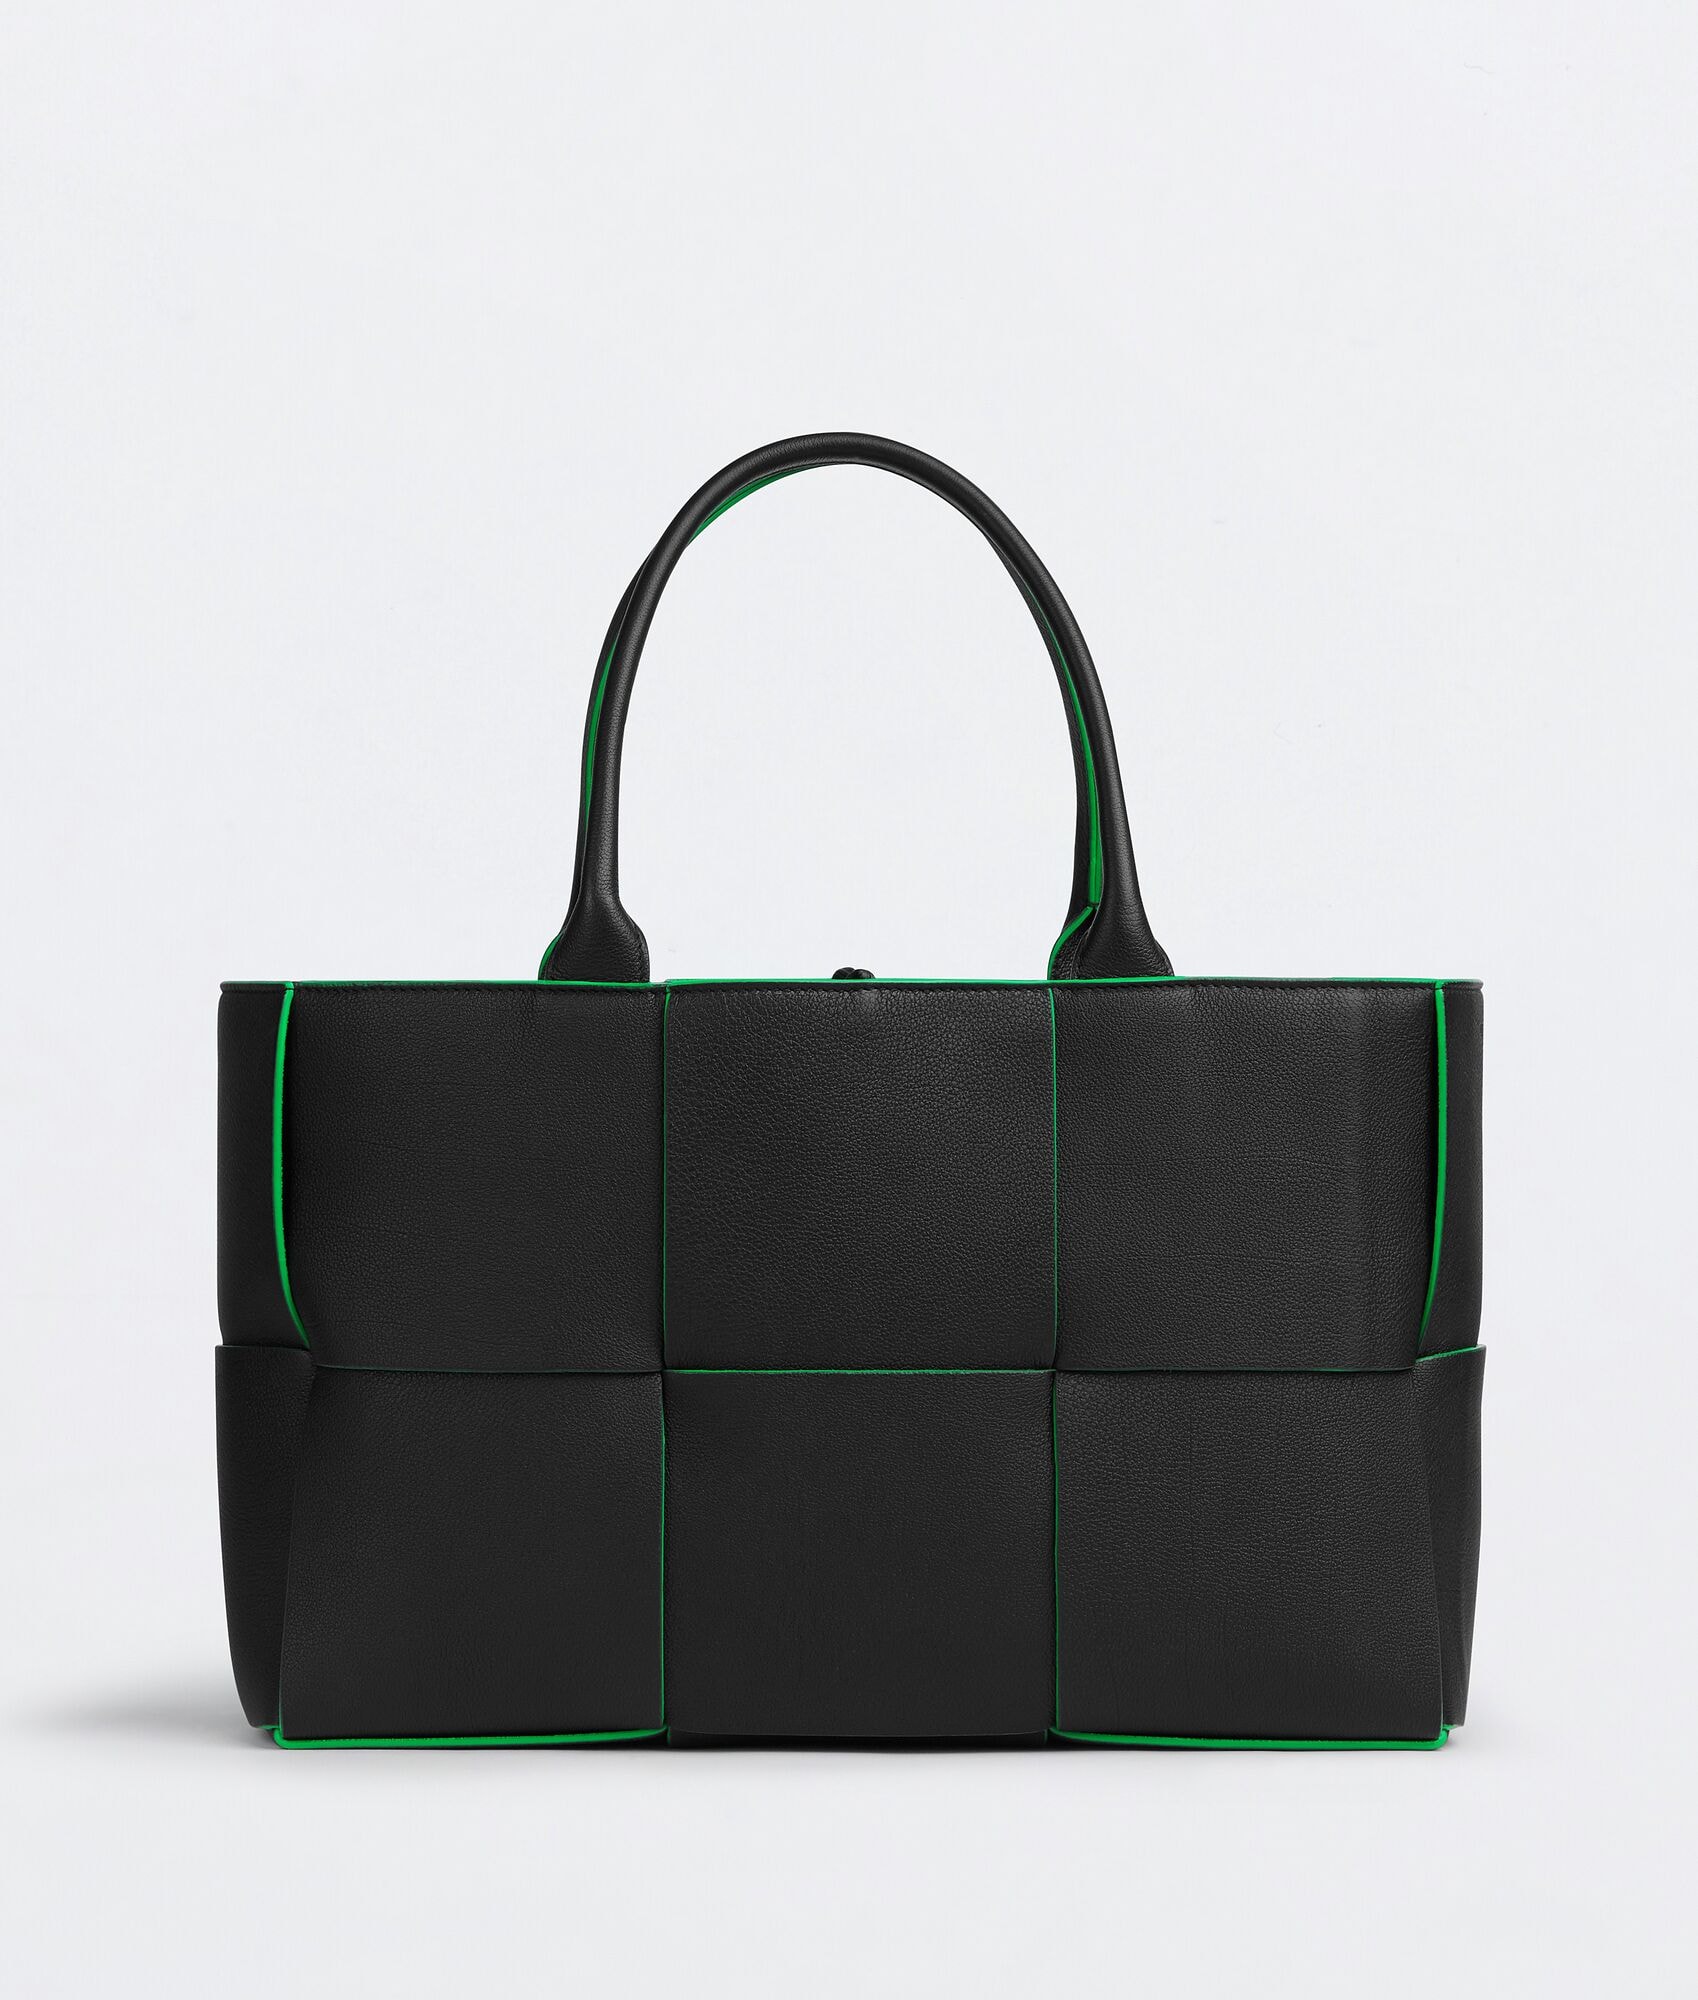 Bottega Veneta Fun leather Collection handbags 2022